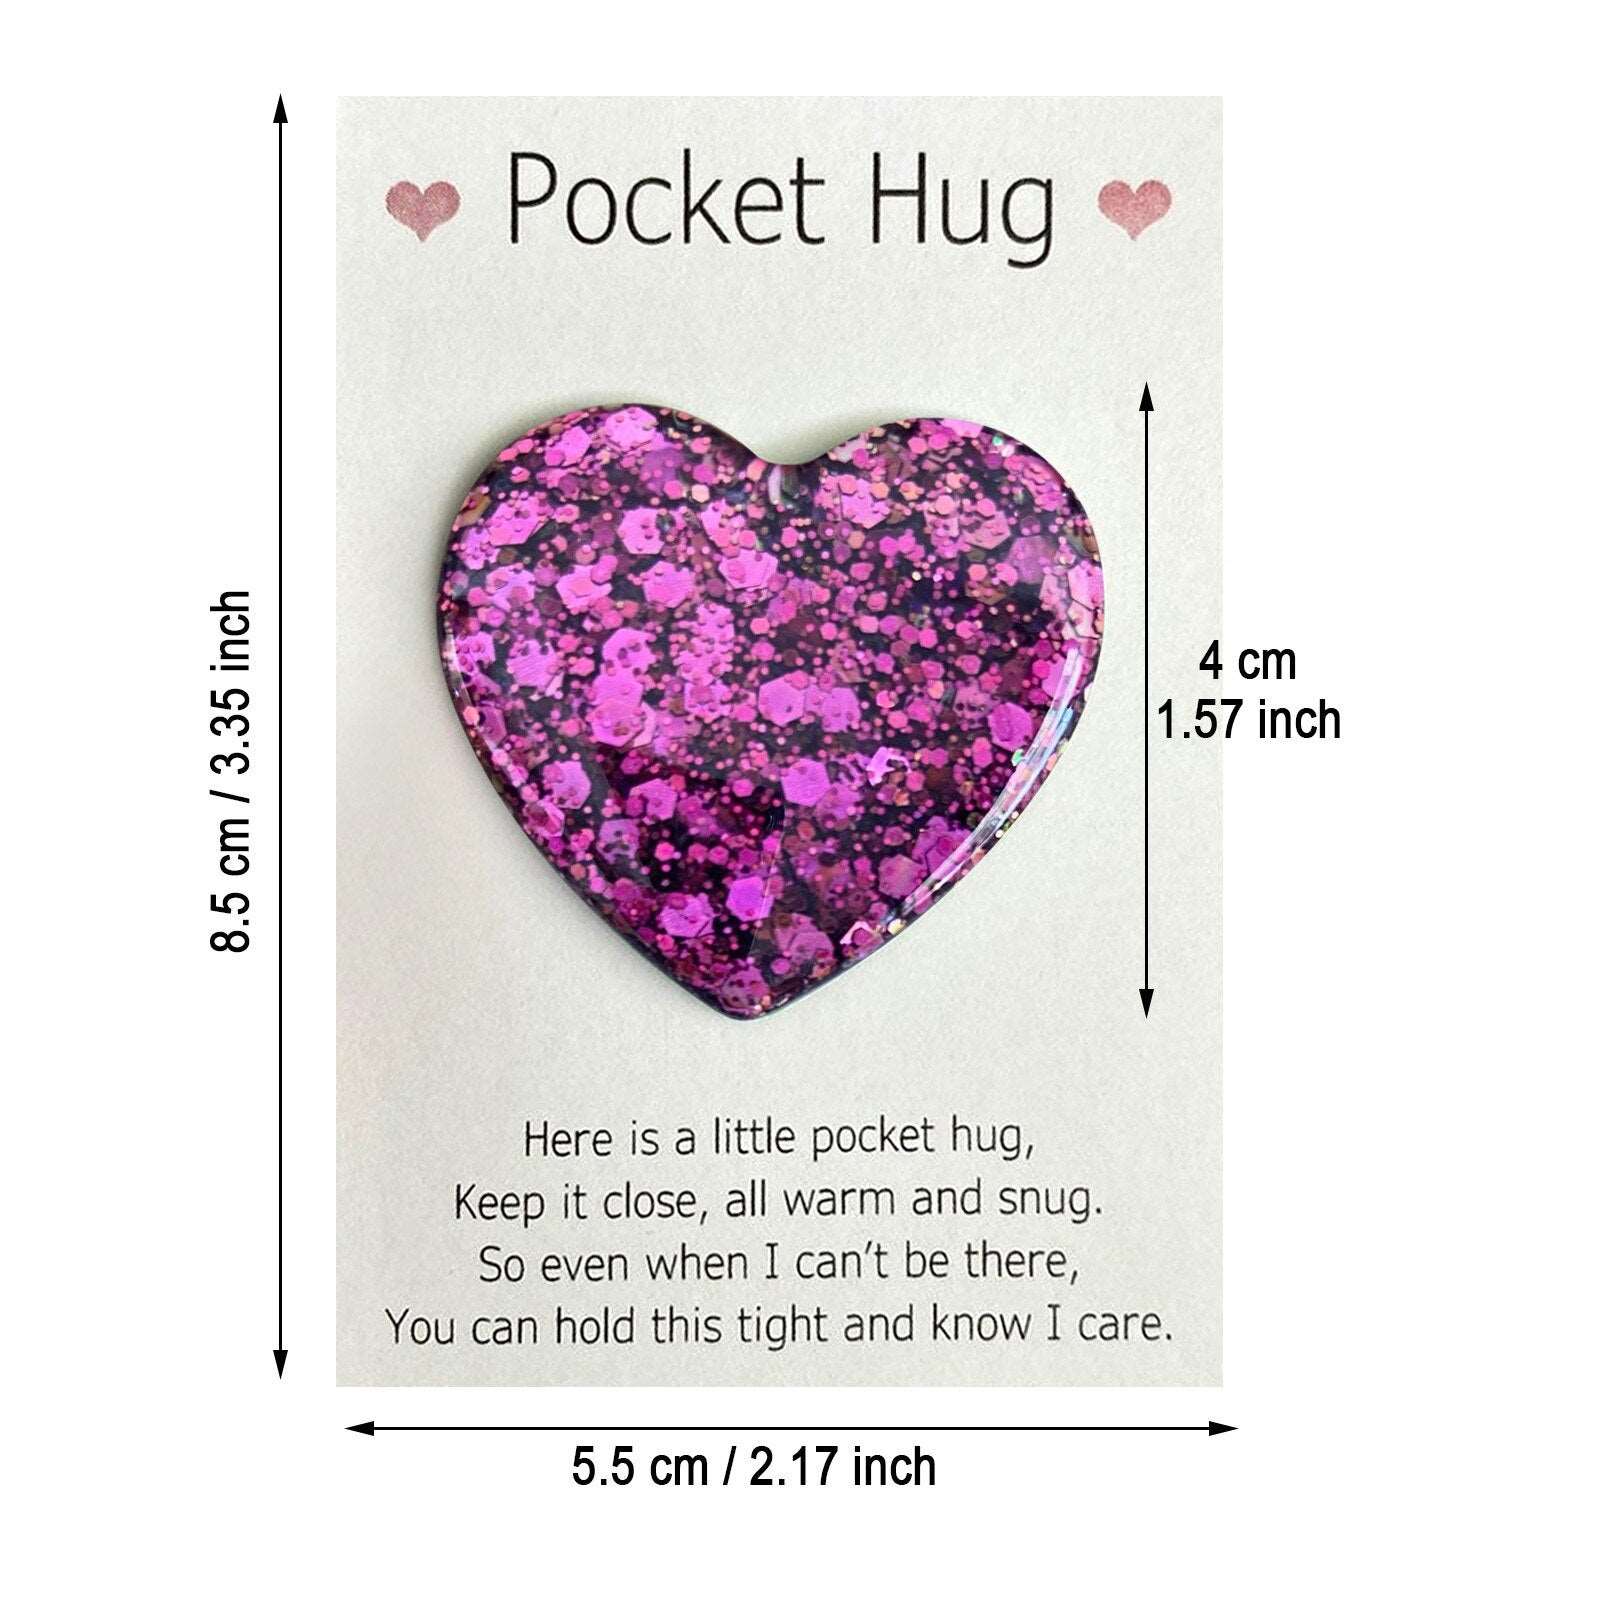 Pocket Hug Heart Love Token - Gift Sets from Dear Cece - Just £6.99! Shop now at Dear Cece